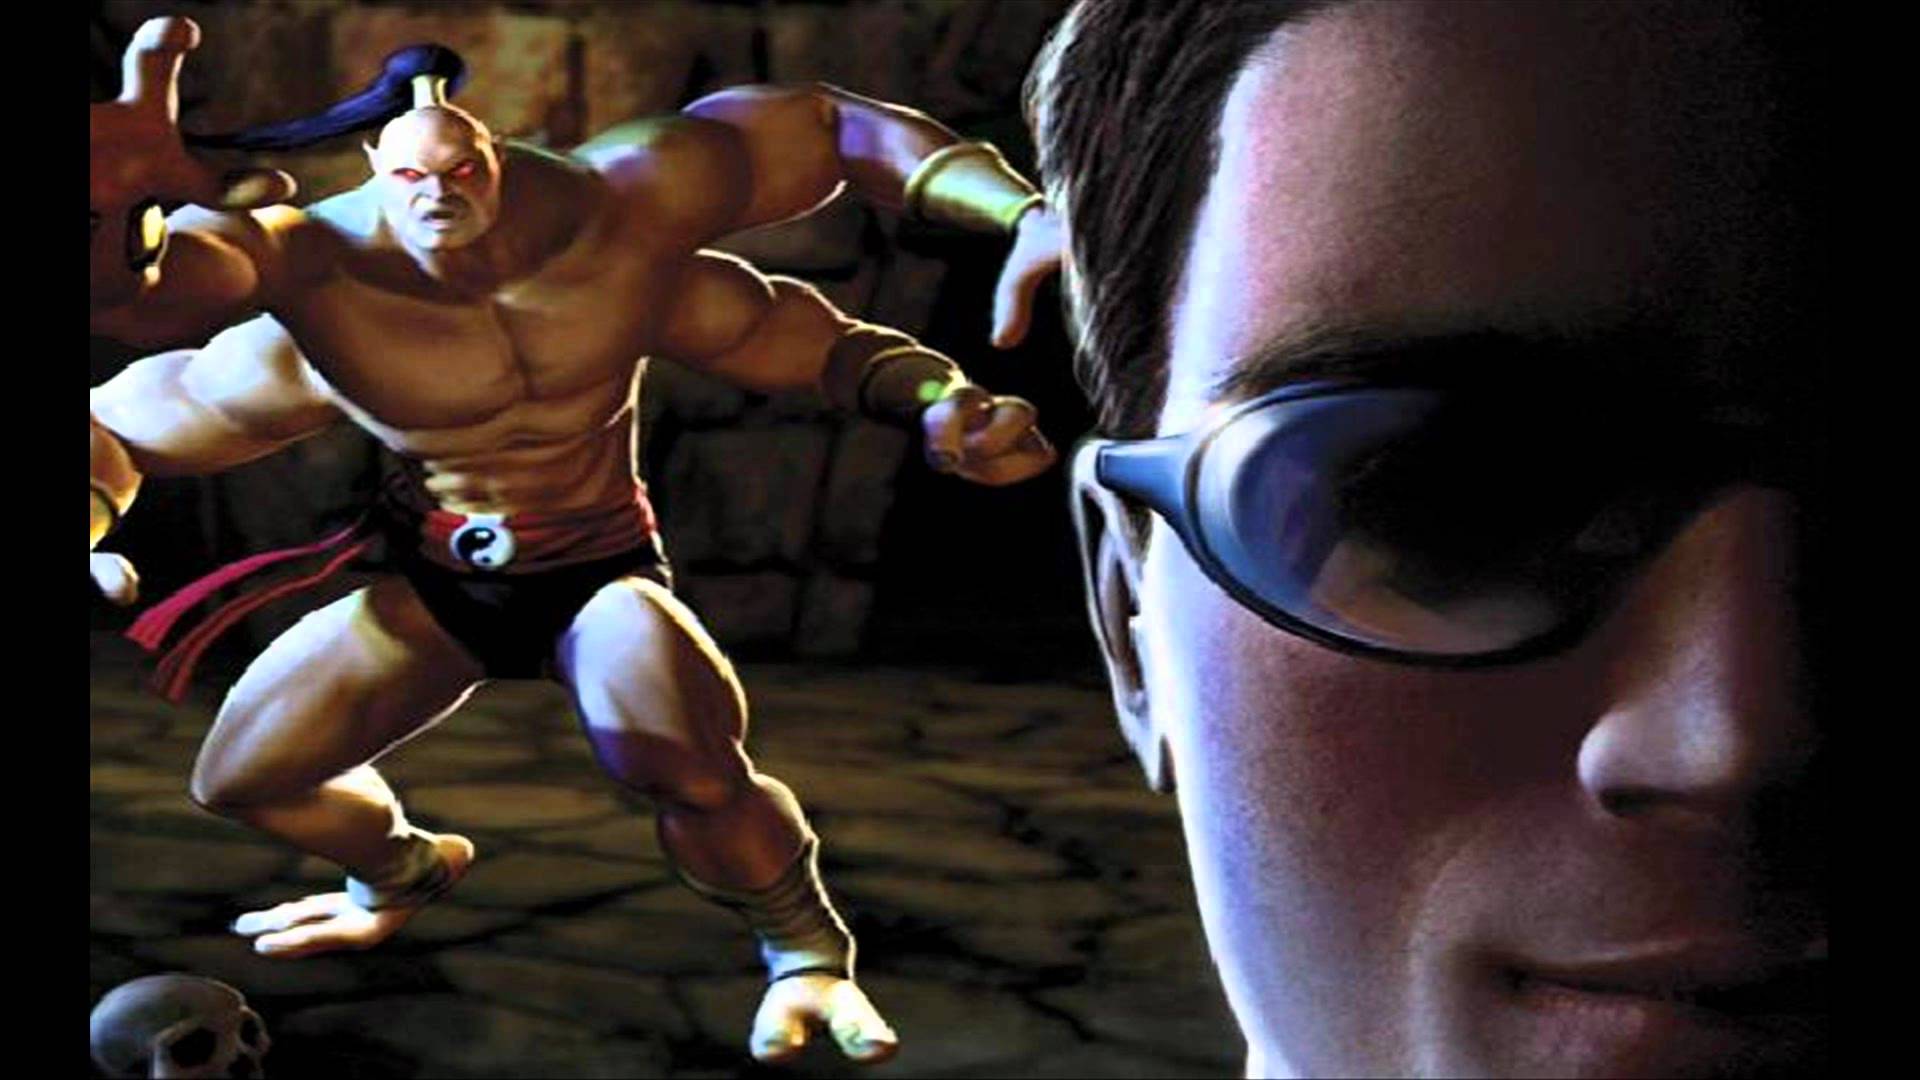 Mortal Kombat Armageddon Splash Screens (2011 Original) - YouTube